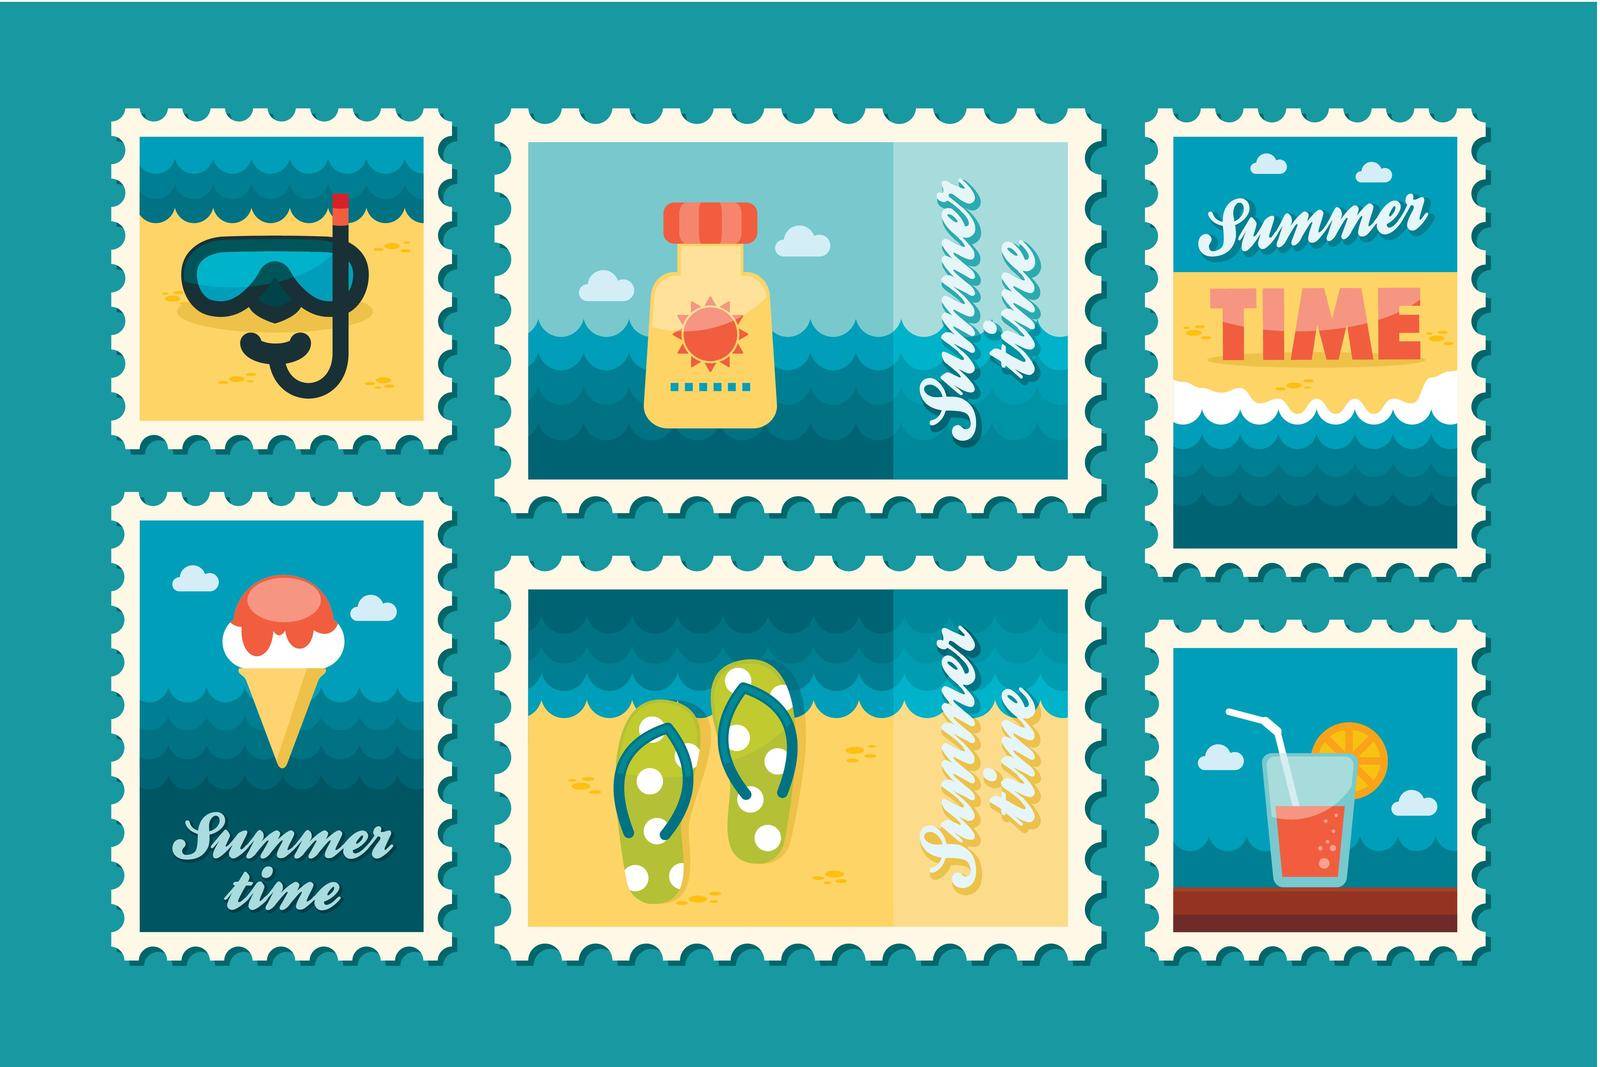 Summertime stamp set flat, vector eps 10